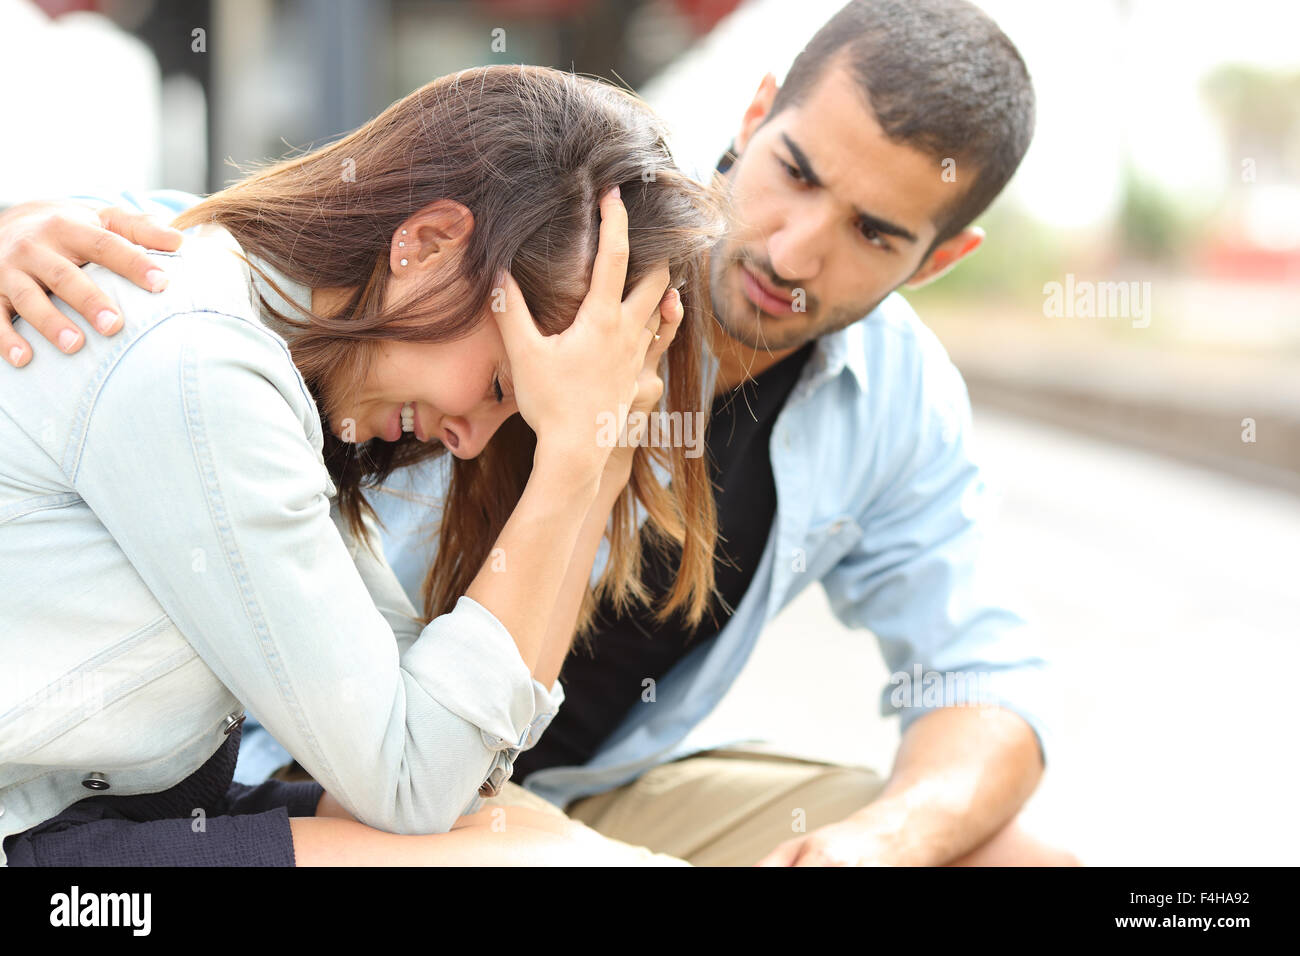 Vista lateral de un hombre musulmán un triste consuelo chica caucásica duelo en una estación de tren Foto de stock